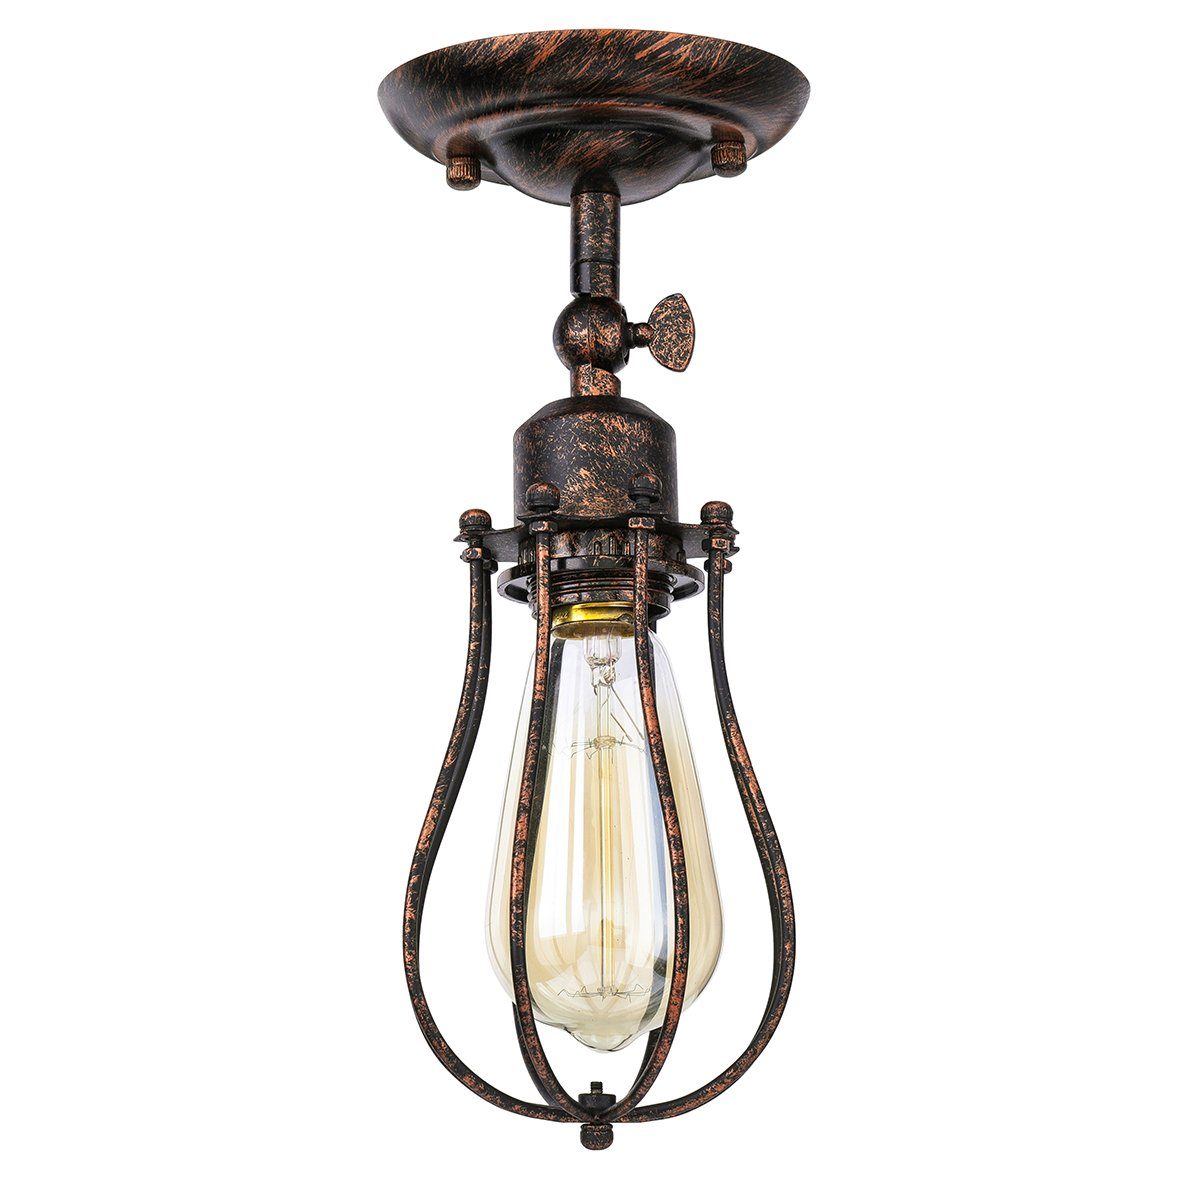 ELEGIANT Wandleuchte KingSo industrielle Vintage Lampen, dekorativ, besonders beruhigendes LED ambiente atmospärisch, fest integriert